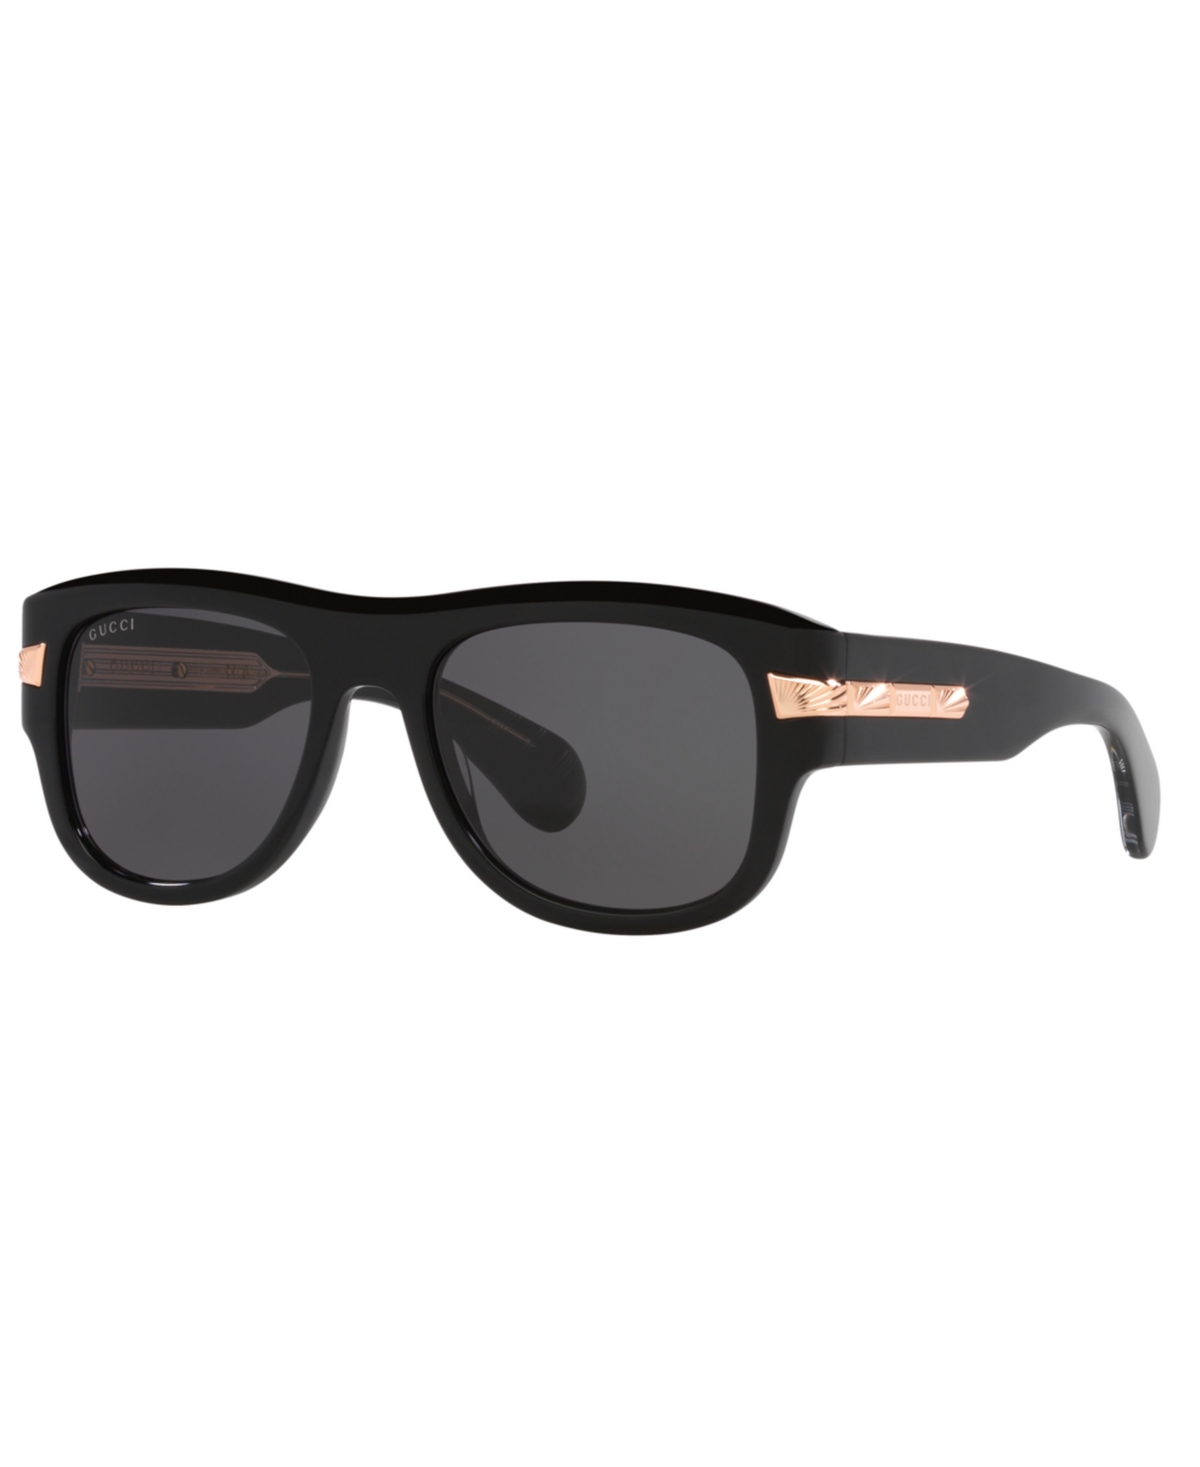 Women's Sunglasses, JC4003HB - Black